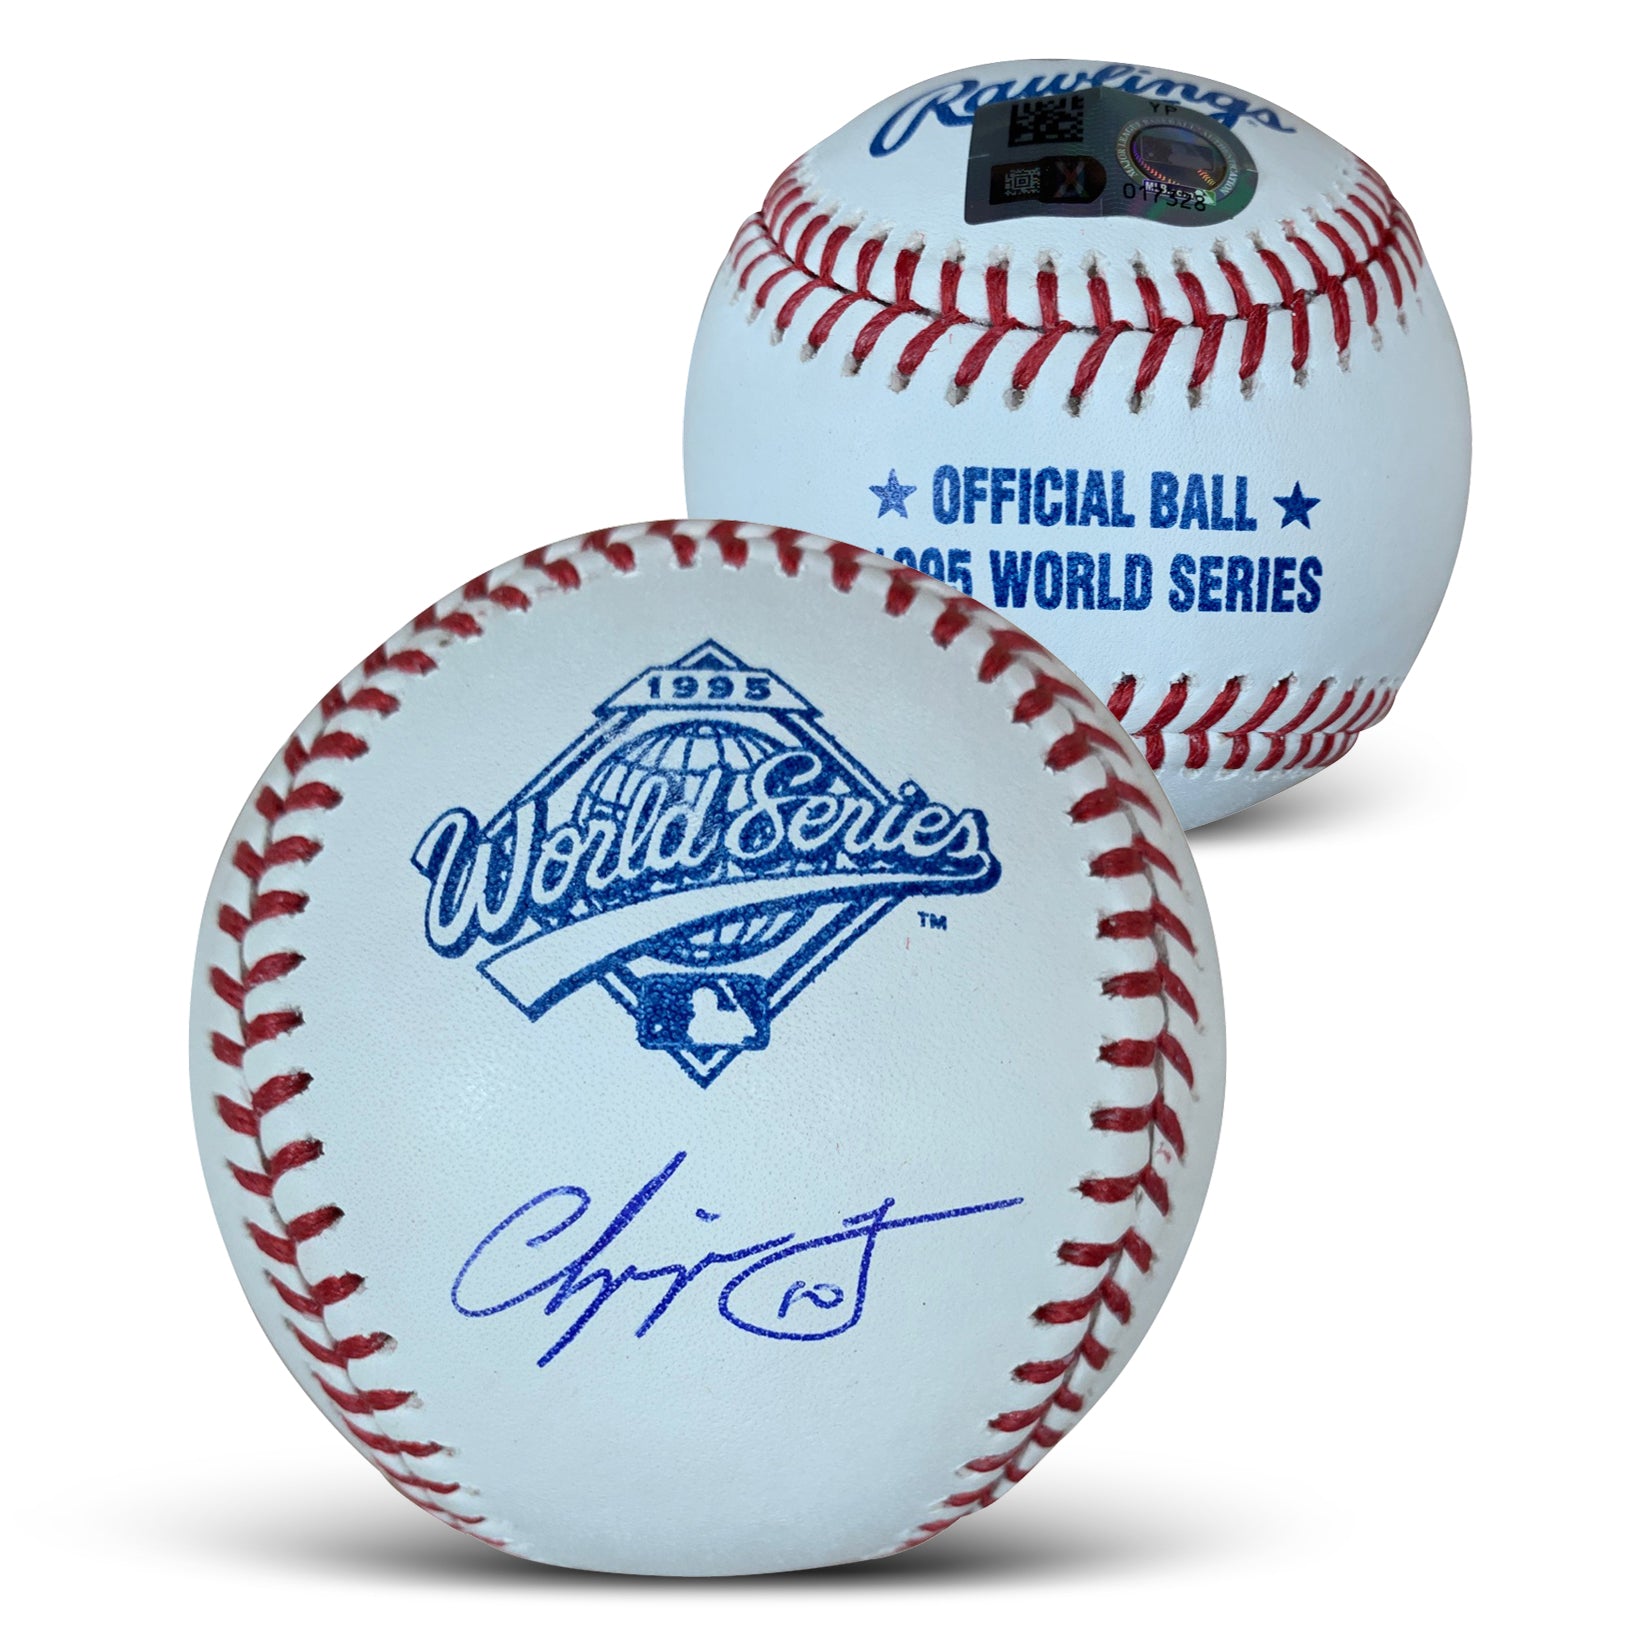 Chipper Jones Autographed 1995 World Series Signed Baseball Fanatics A